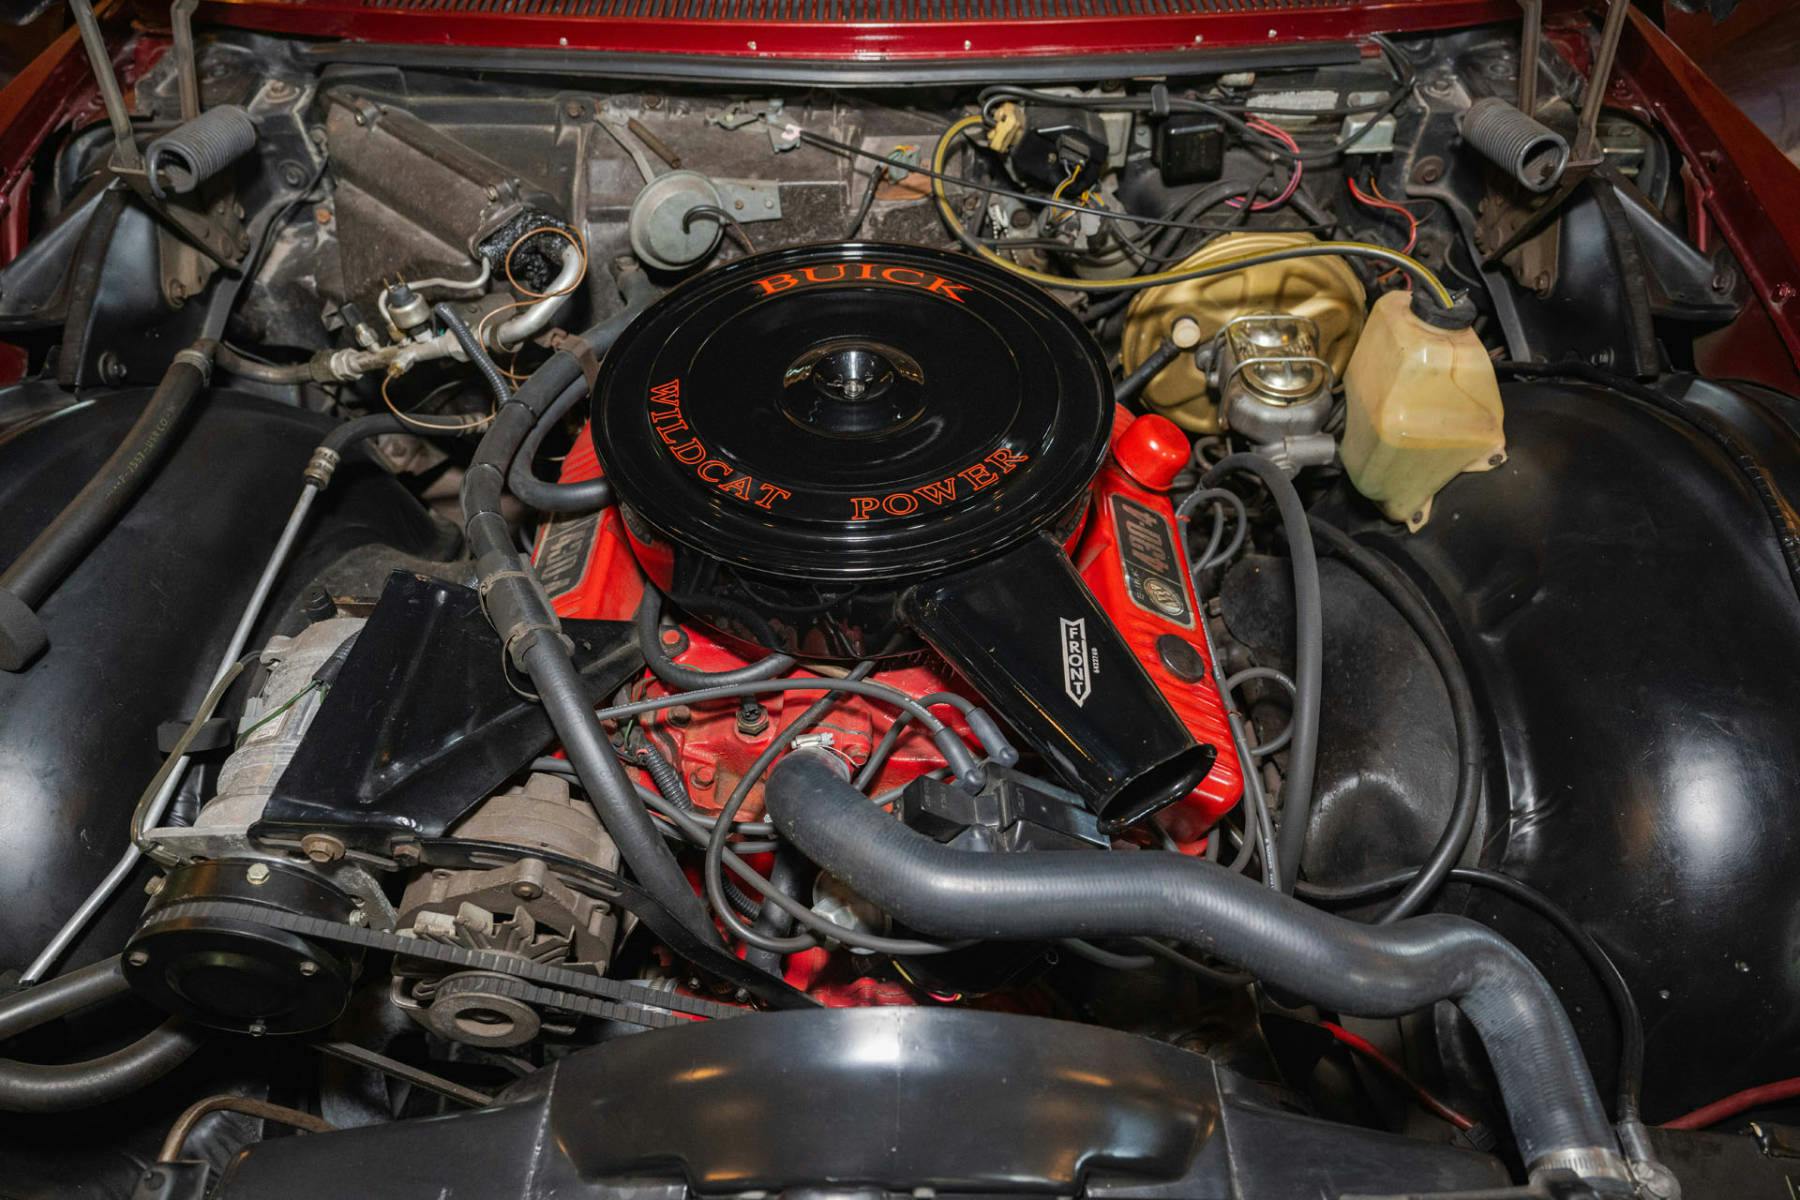 1967 Buick Riviera engine bay